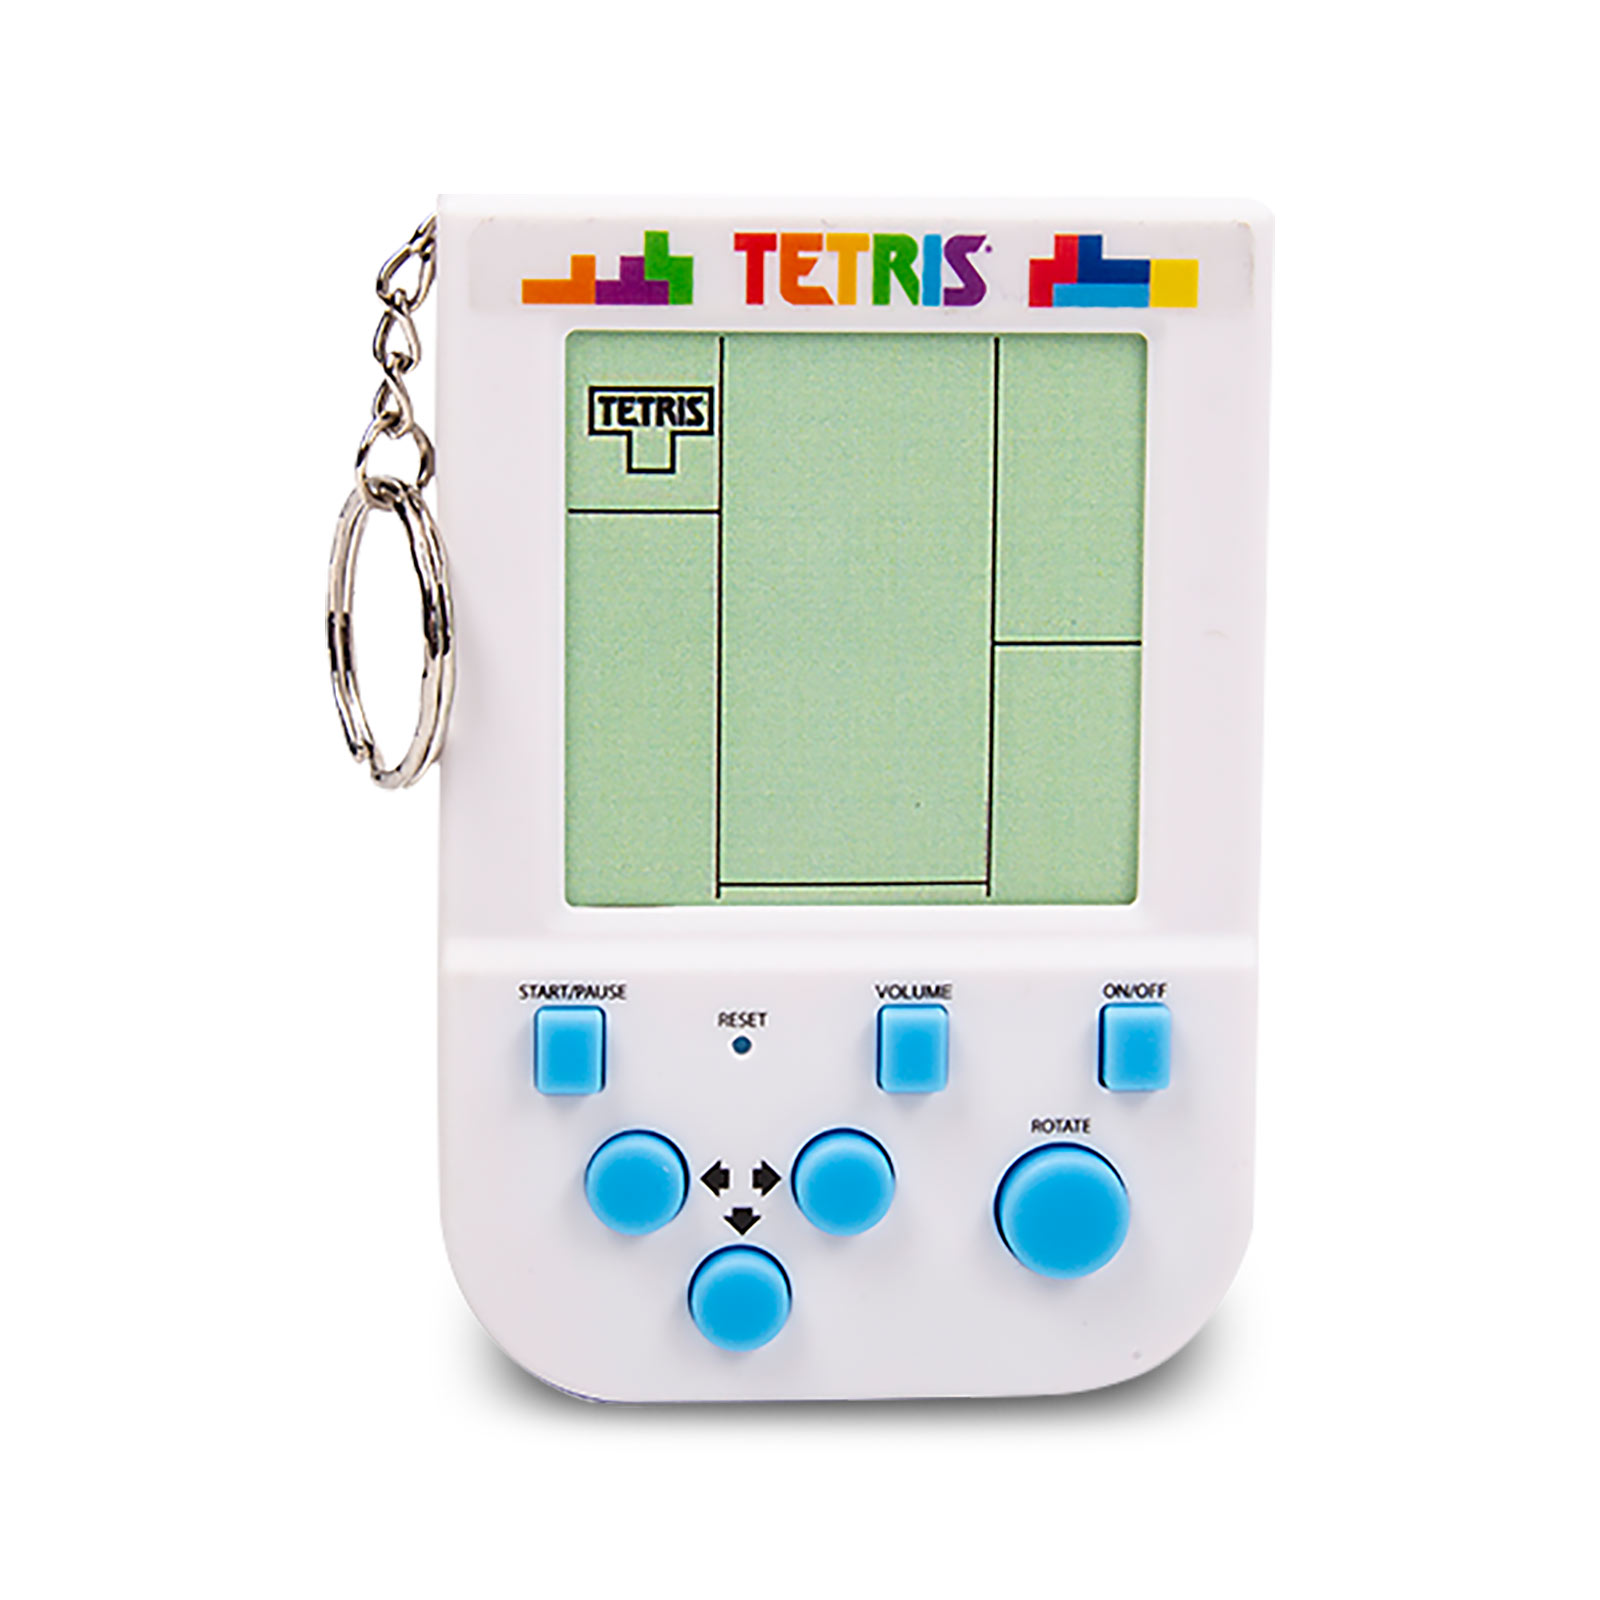 Tetris - Retro Game Mini Konsole